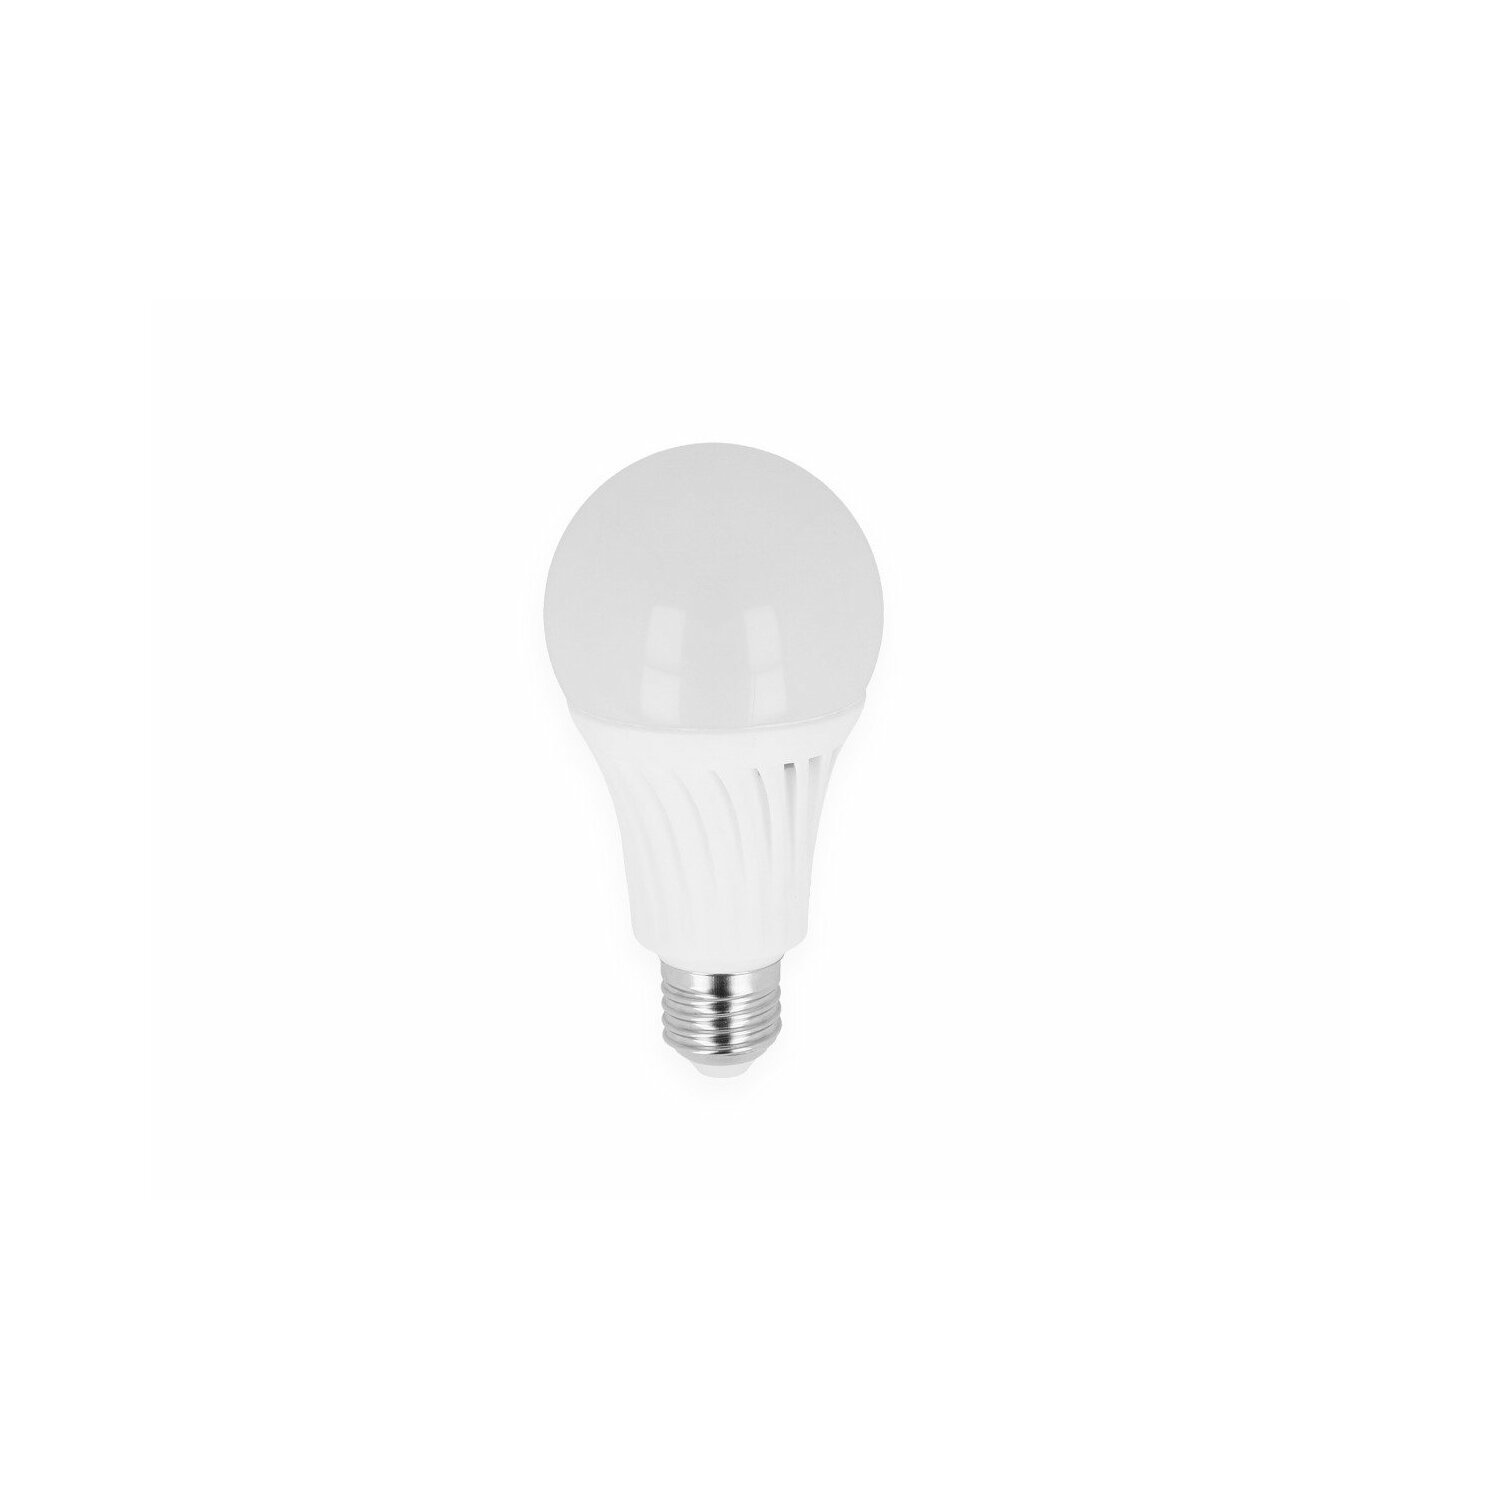 LED LINE 10x E27 Leuchtmittel Warmweiß Ceramic 1800 LED LED lm 18W